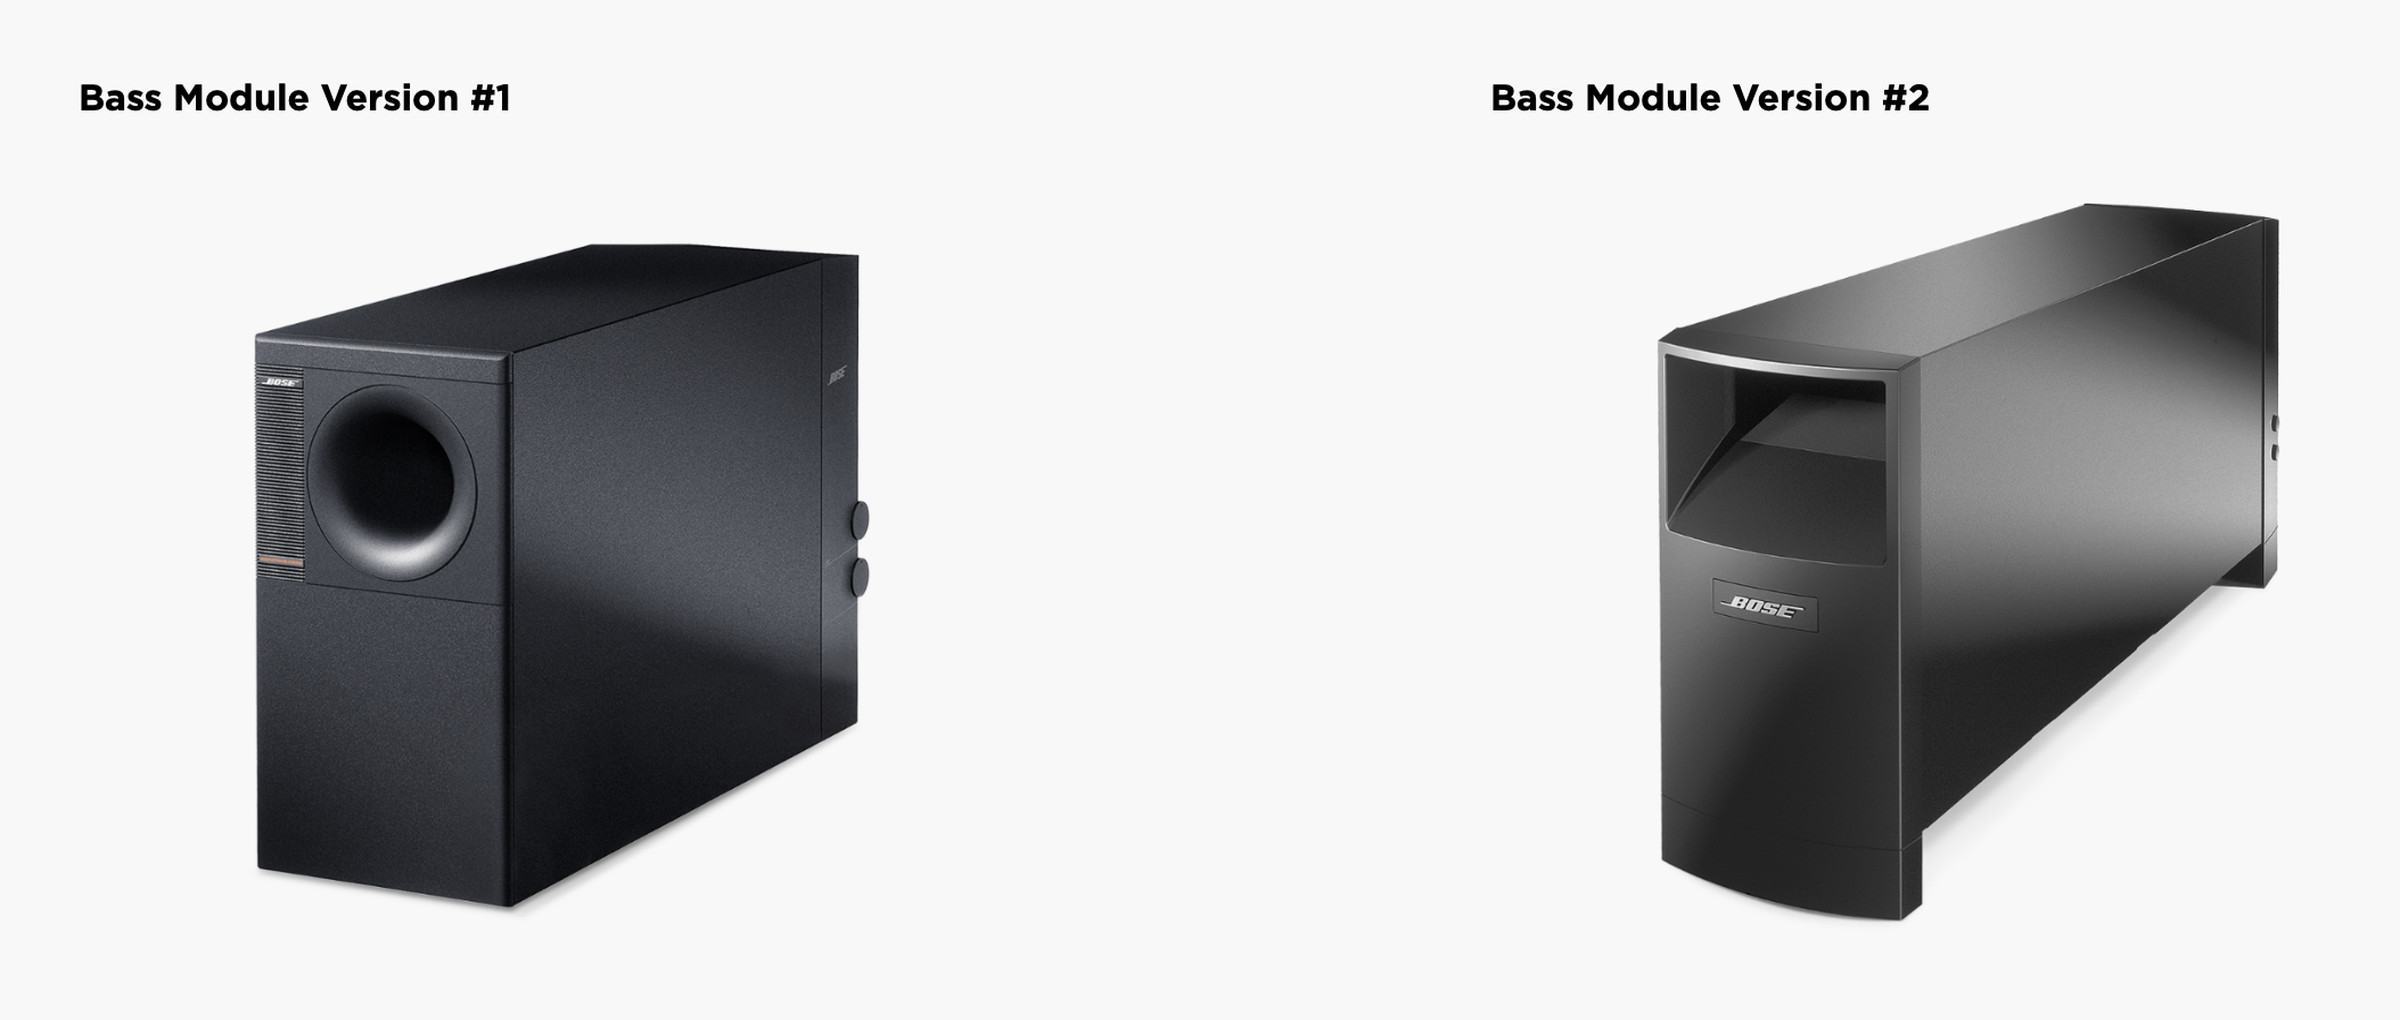 A photo of Bose’s recalled bass modules.